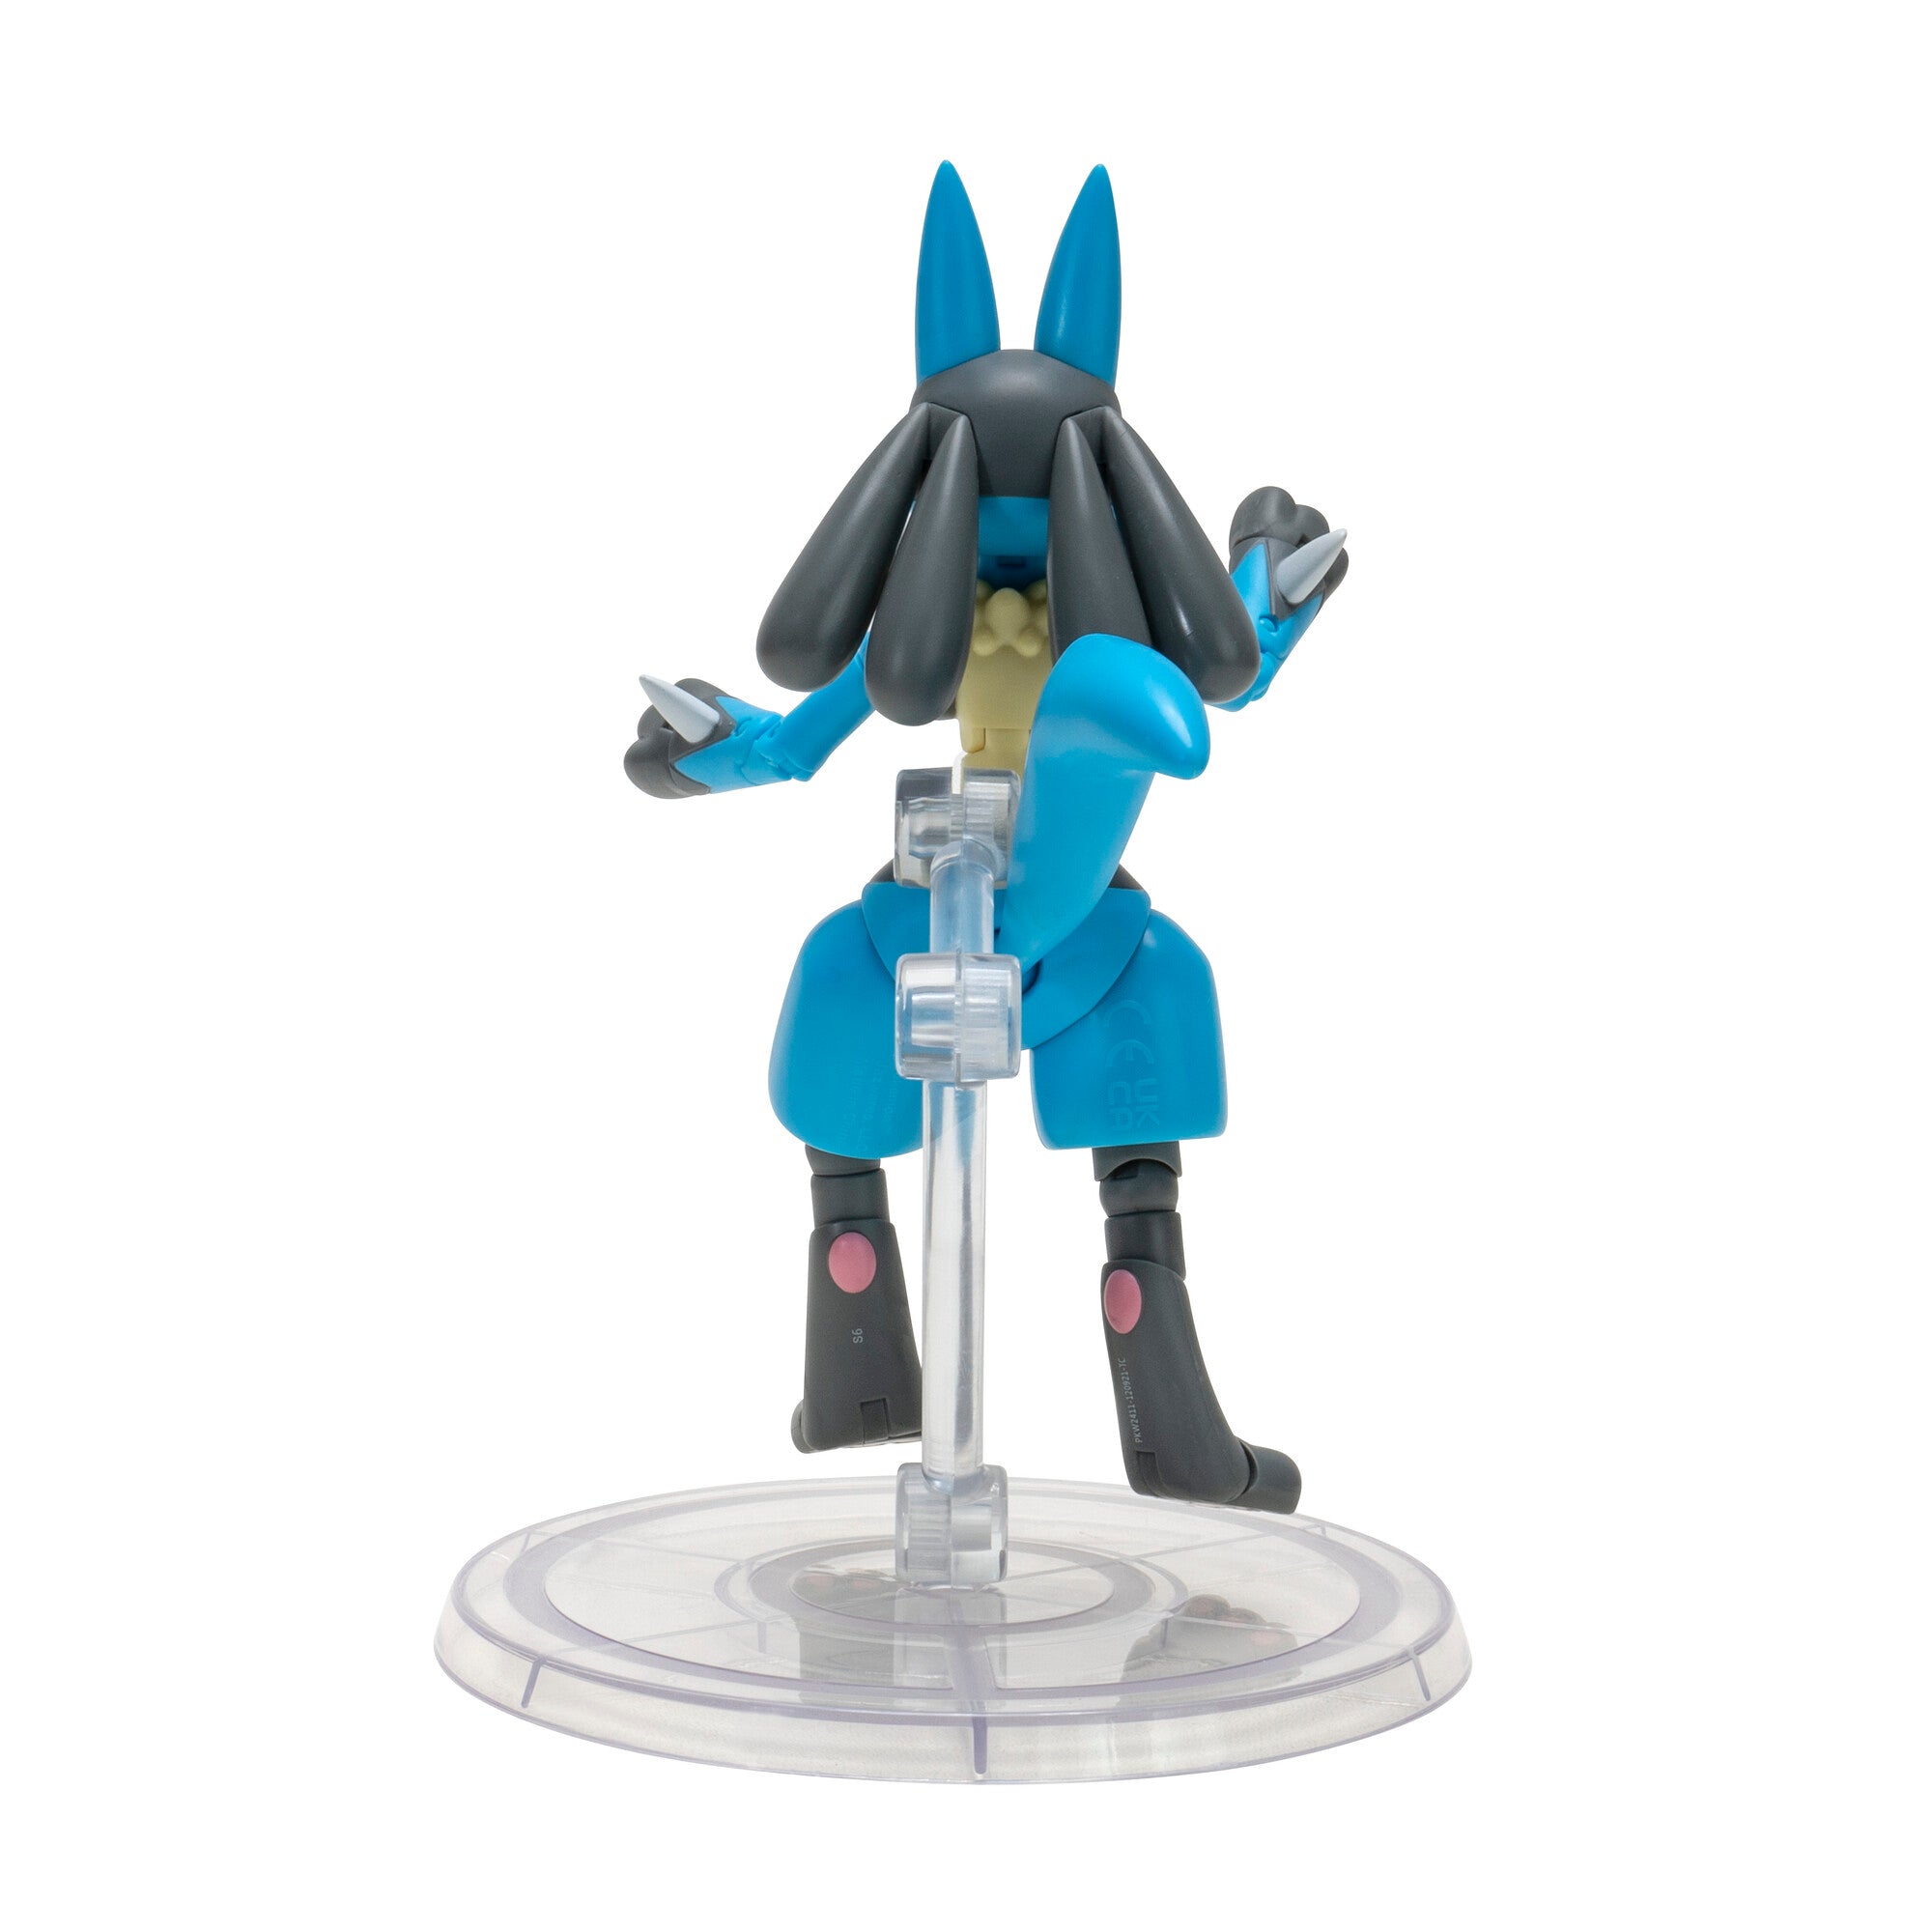 Pokemon Select Super Articulated Figure: Lucario Figura De Accion 6 Pulgadas